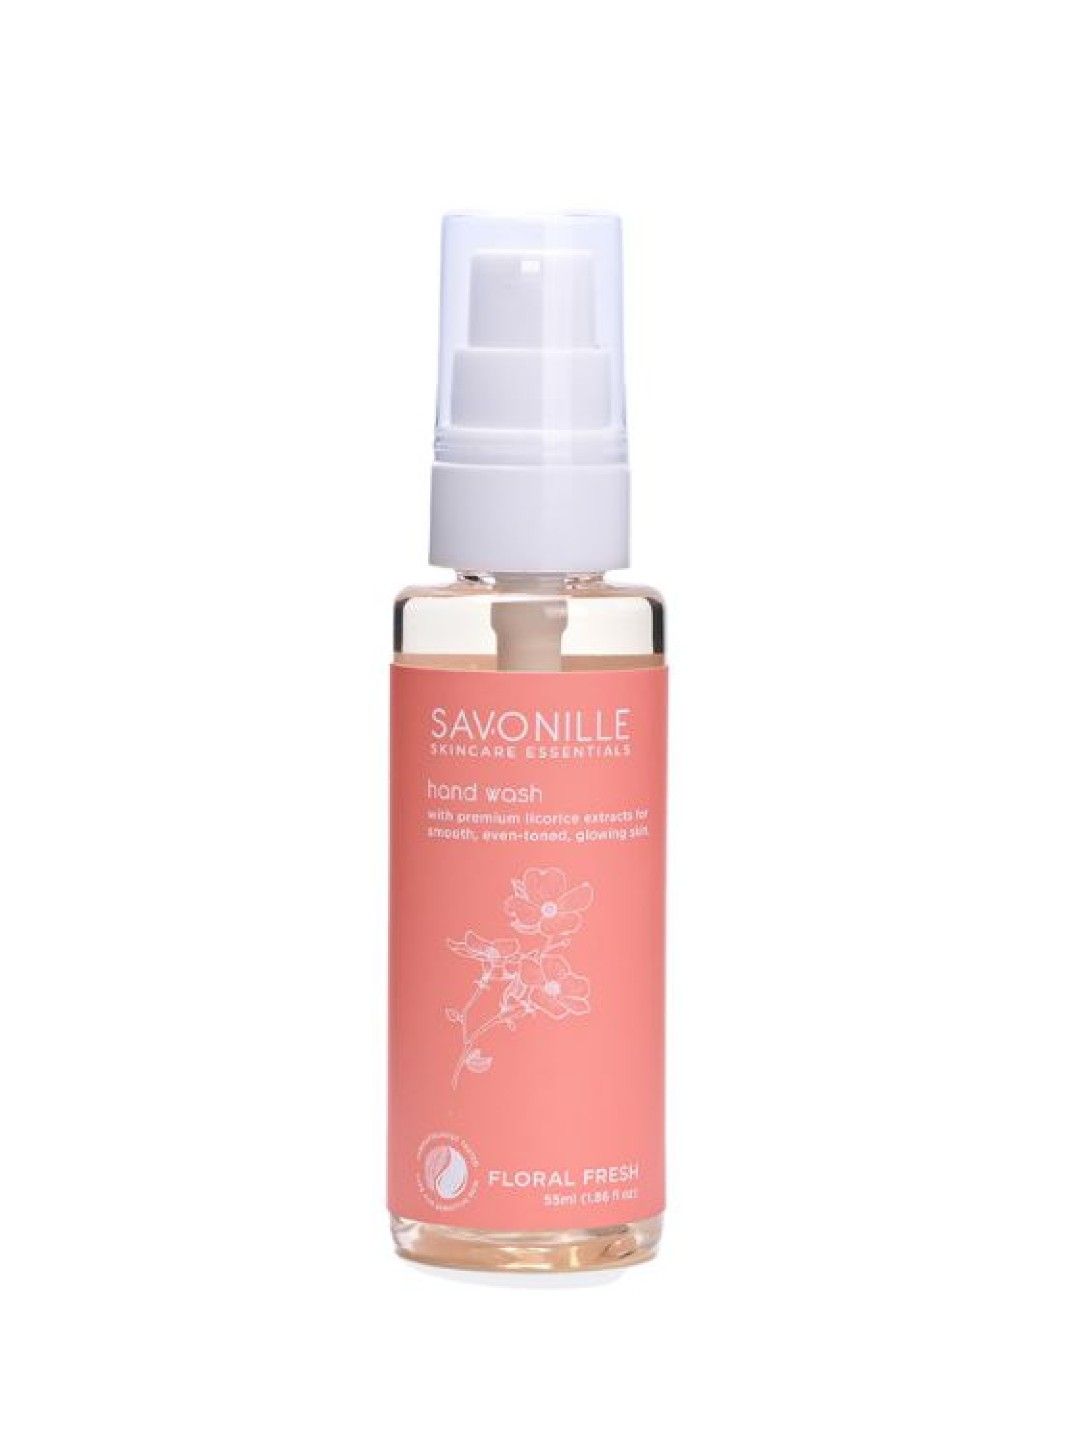 Savonille Skincare Essentials Floral Fresh Travel Trio (No Color- Image 3)